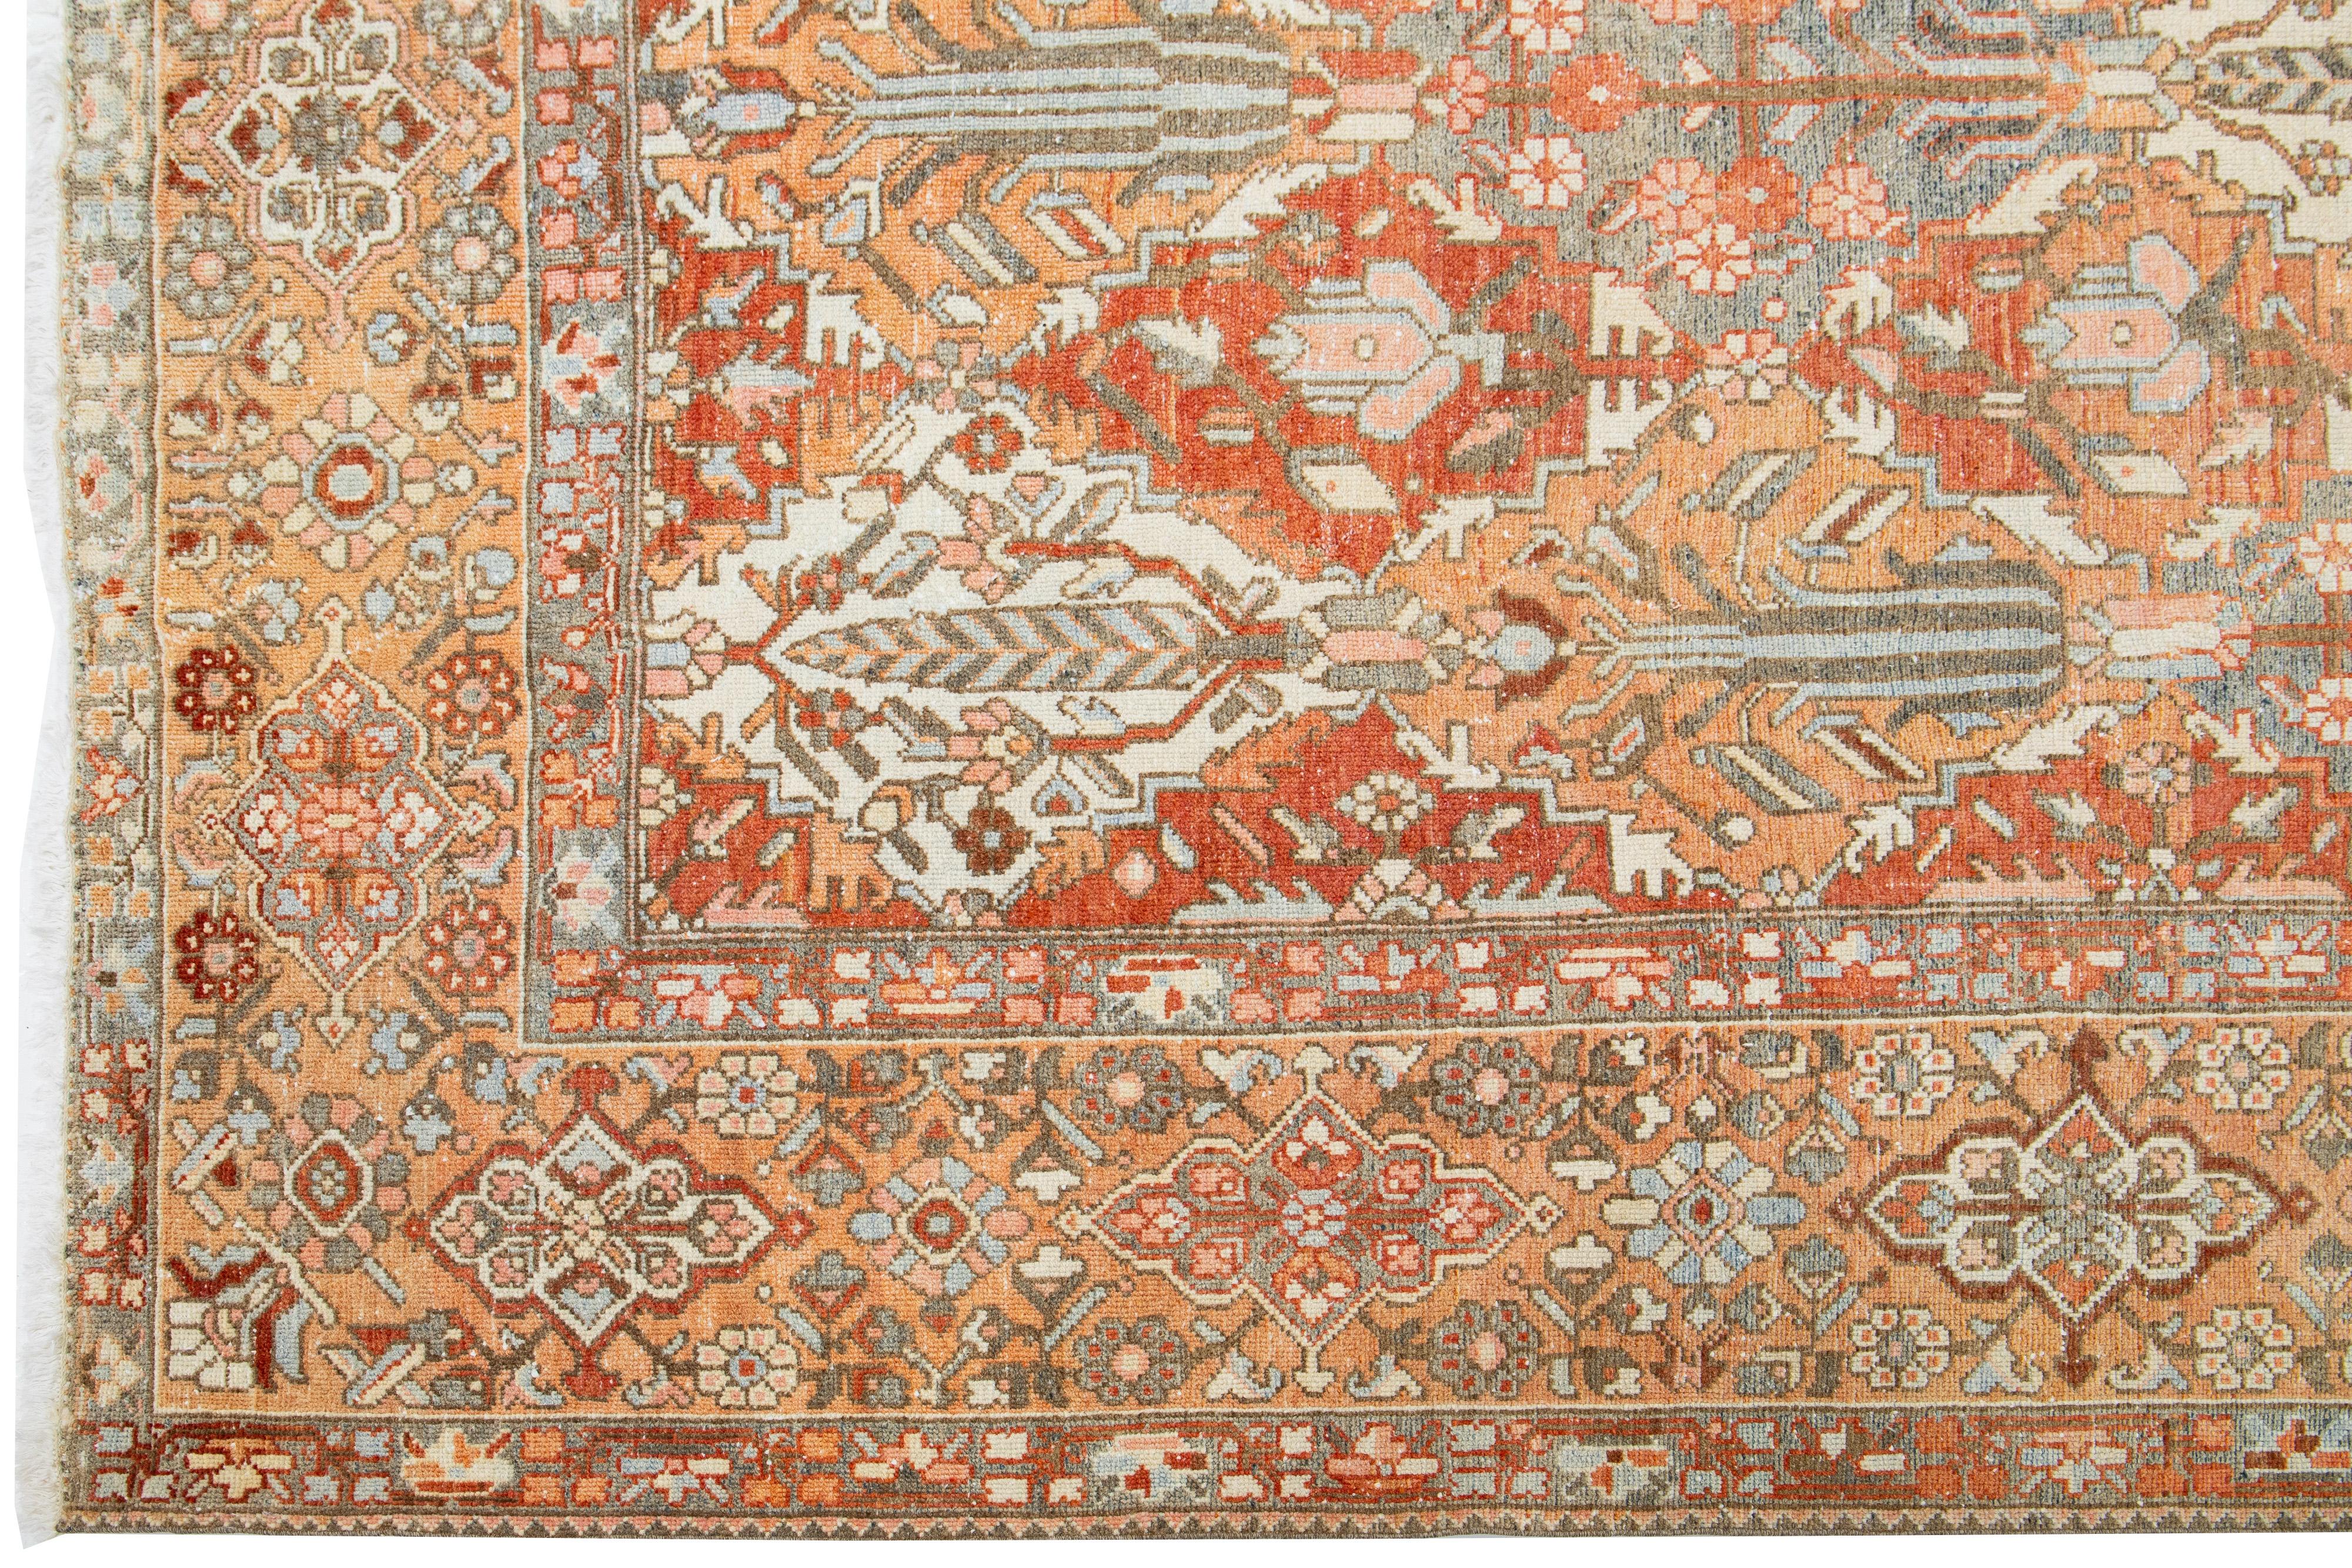 20th Century Handmade 1920s Persian Bakhtiari Wool Rug with Floral Motif In Orange  For Sale